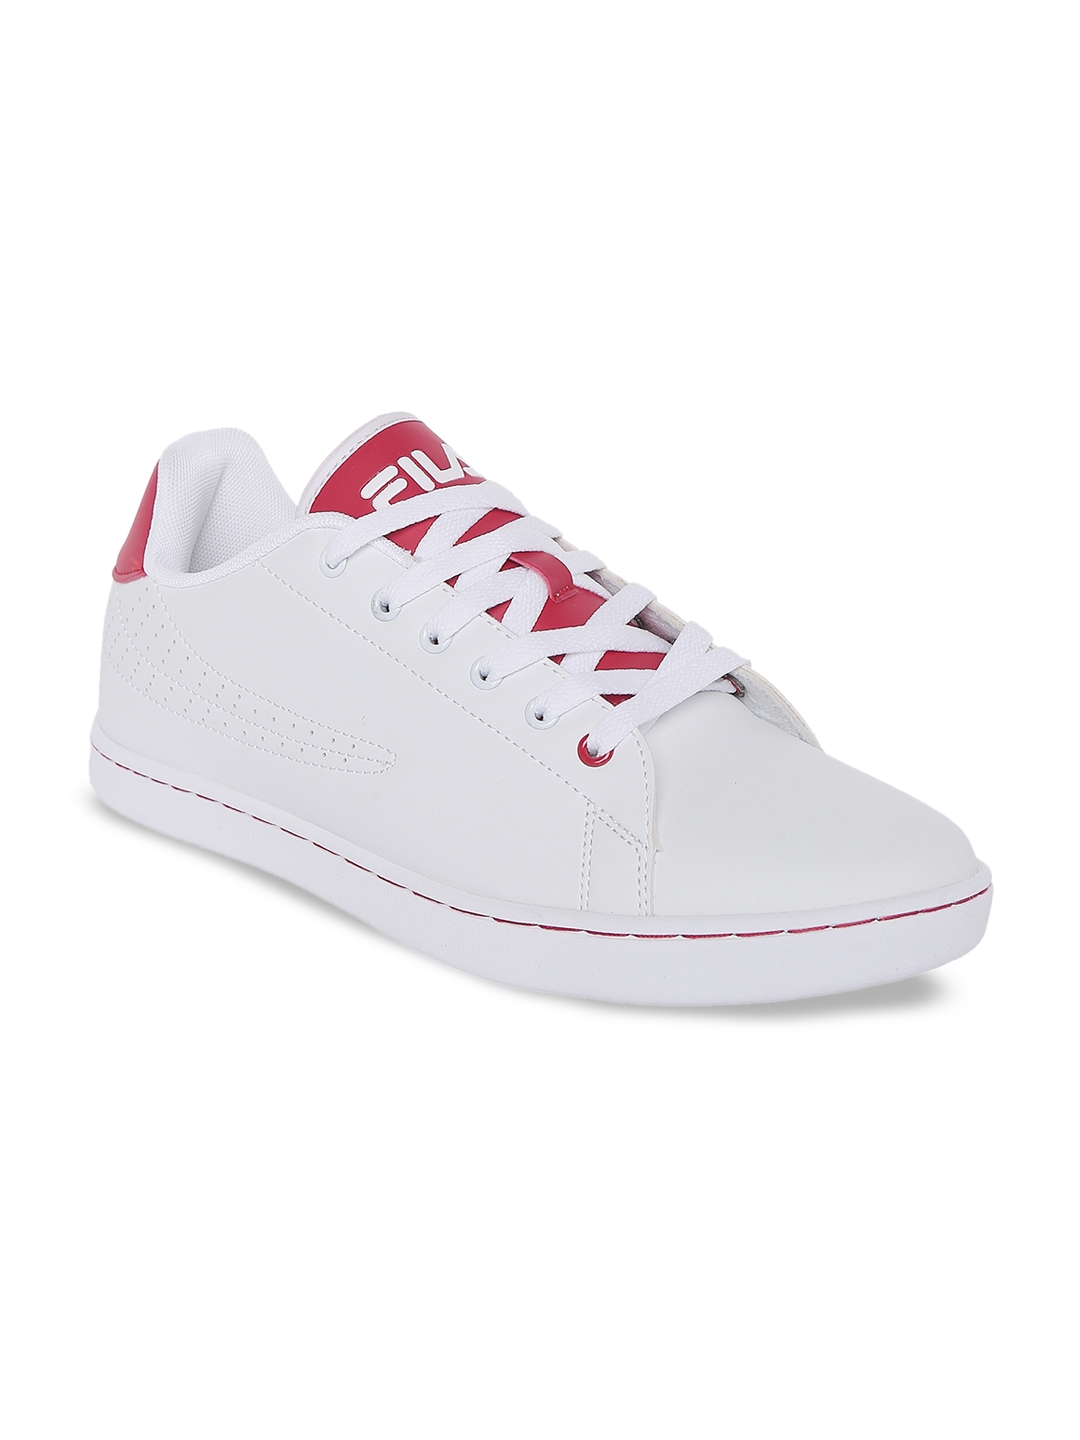 FILA Men White Sneakers - Casual Shoes 